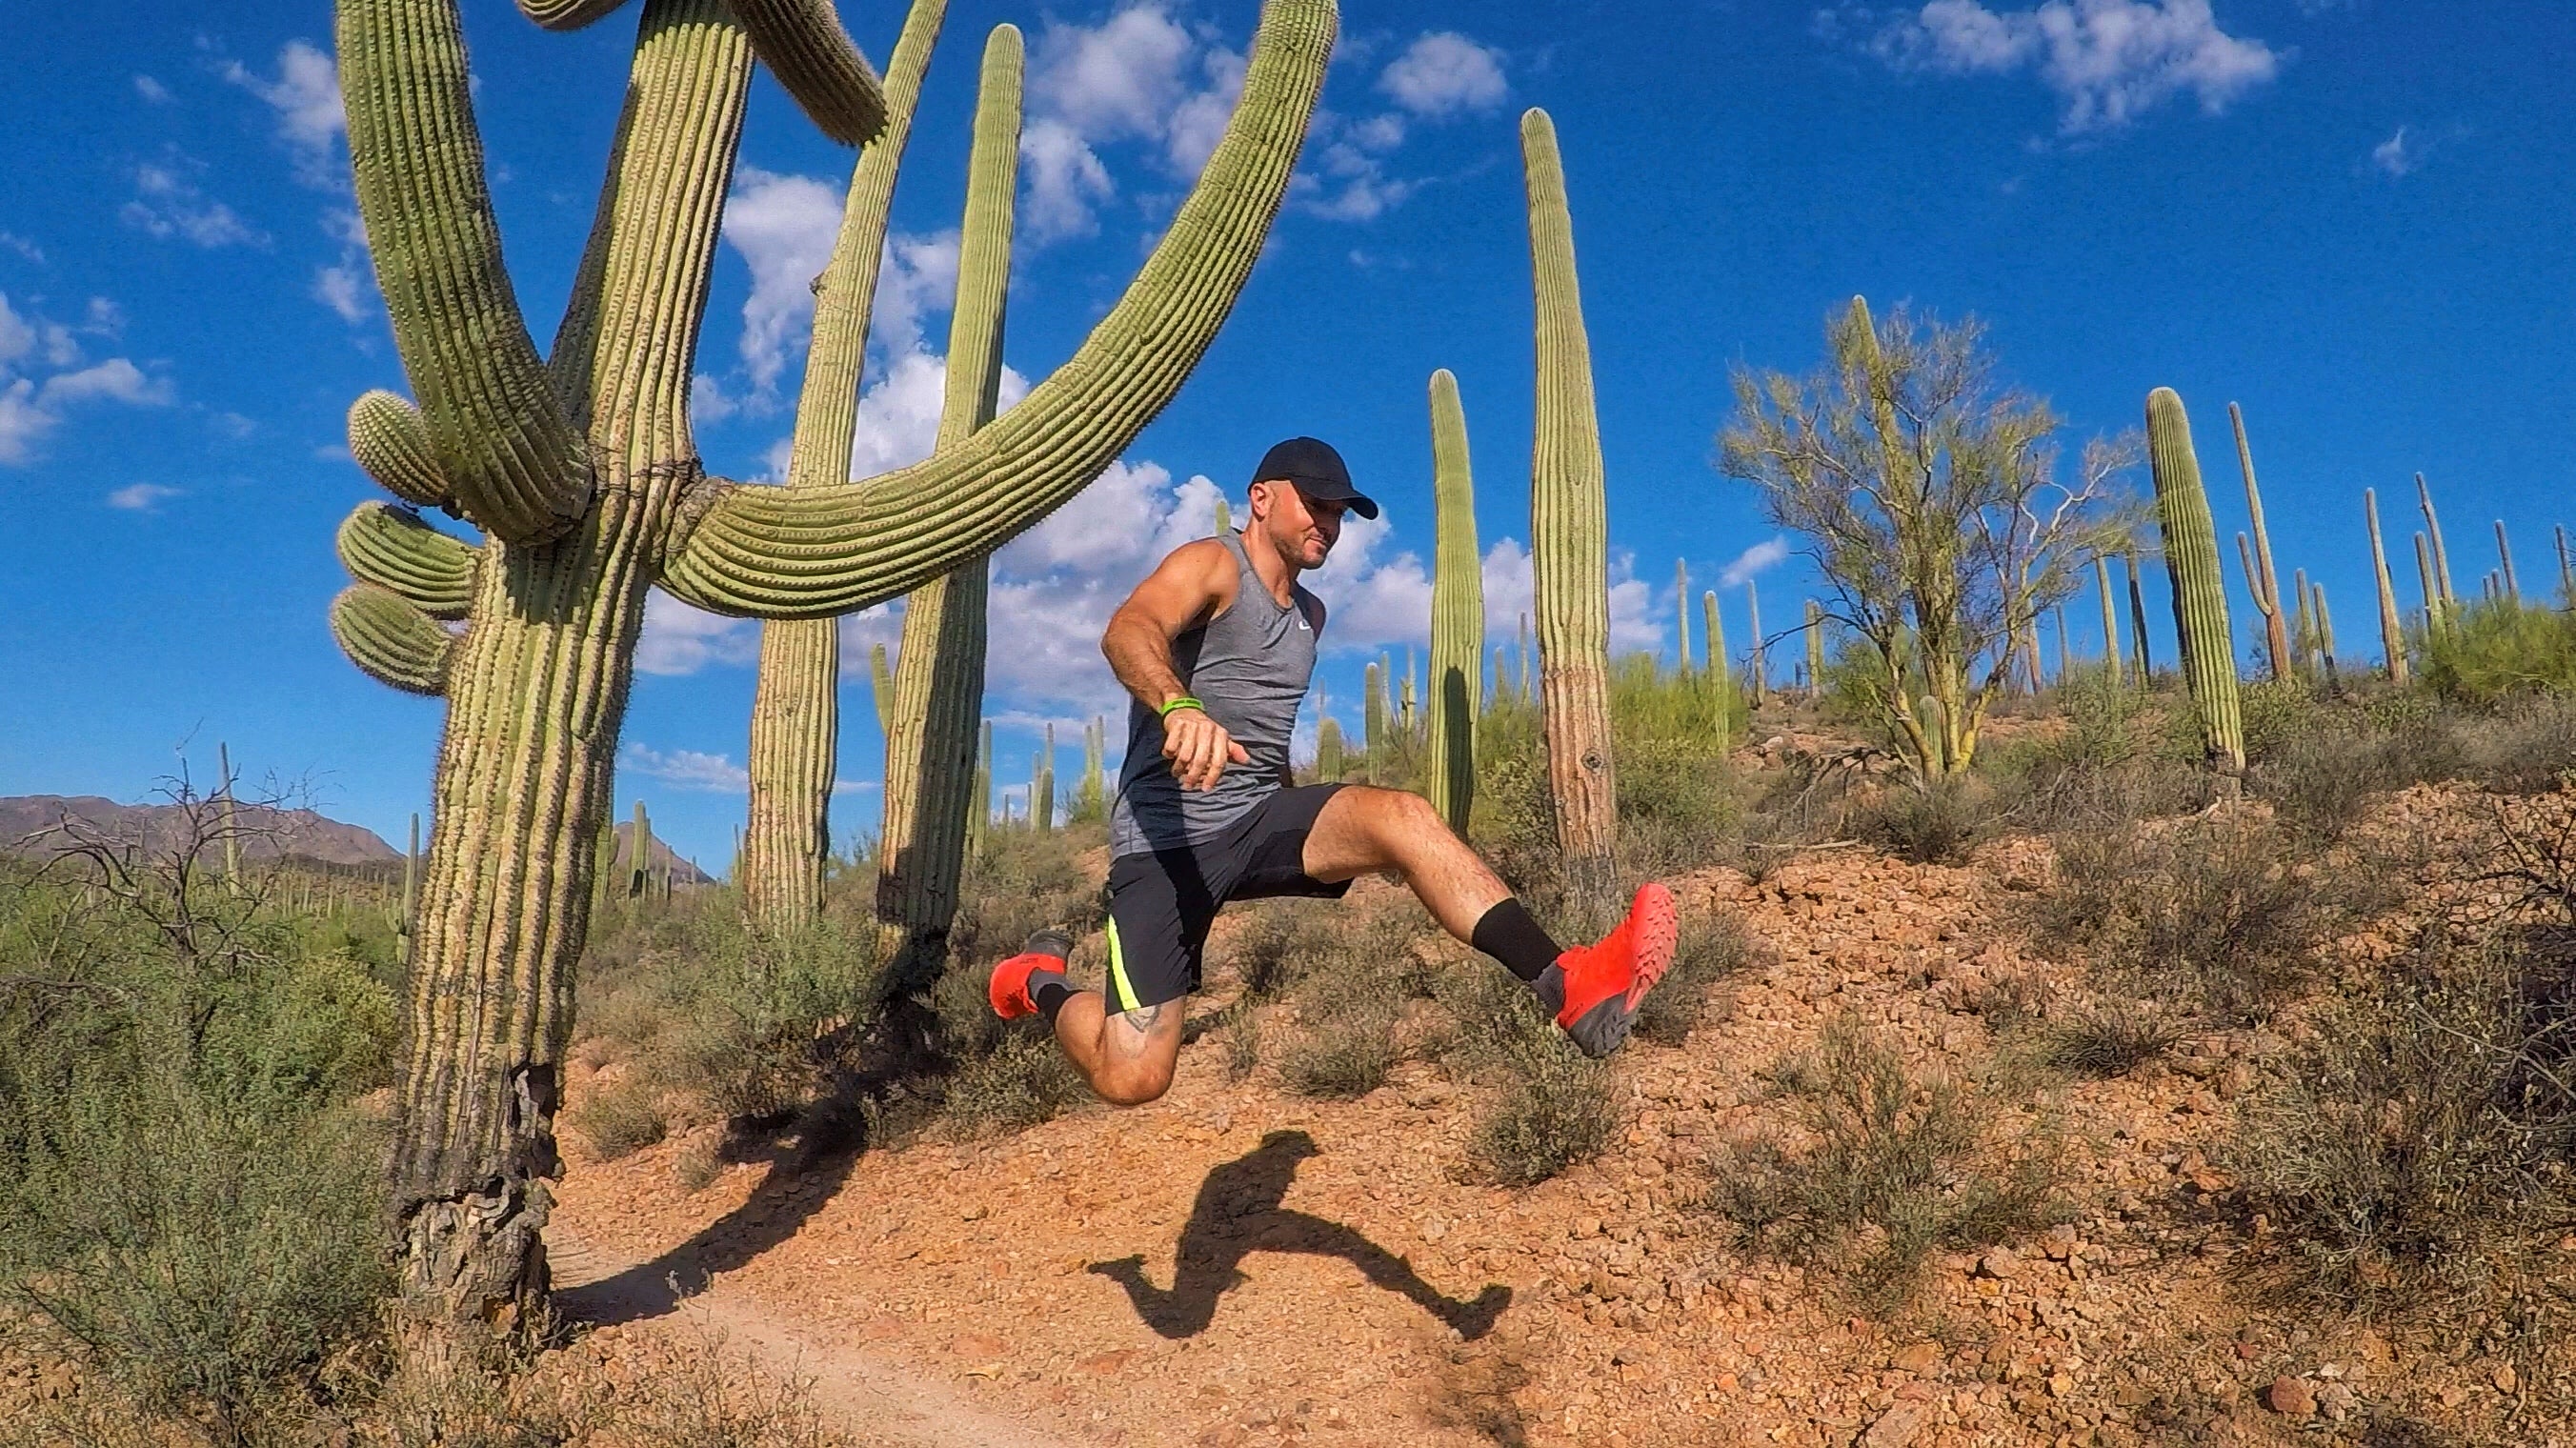 Man jumping by cactus in an Arizona ultramarathon. 